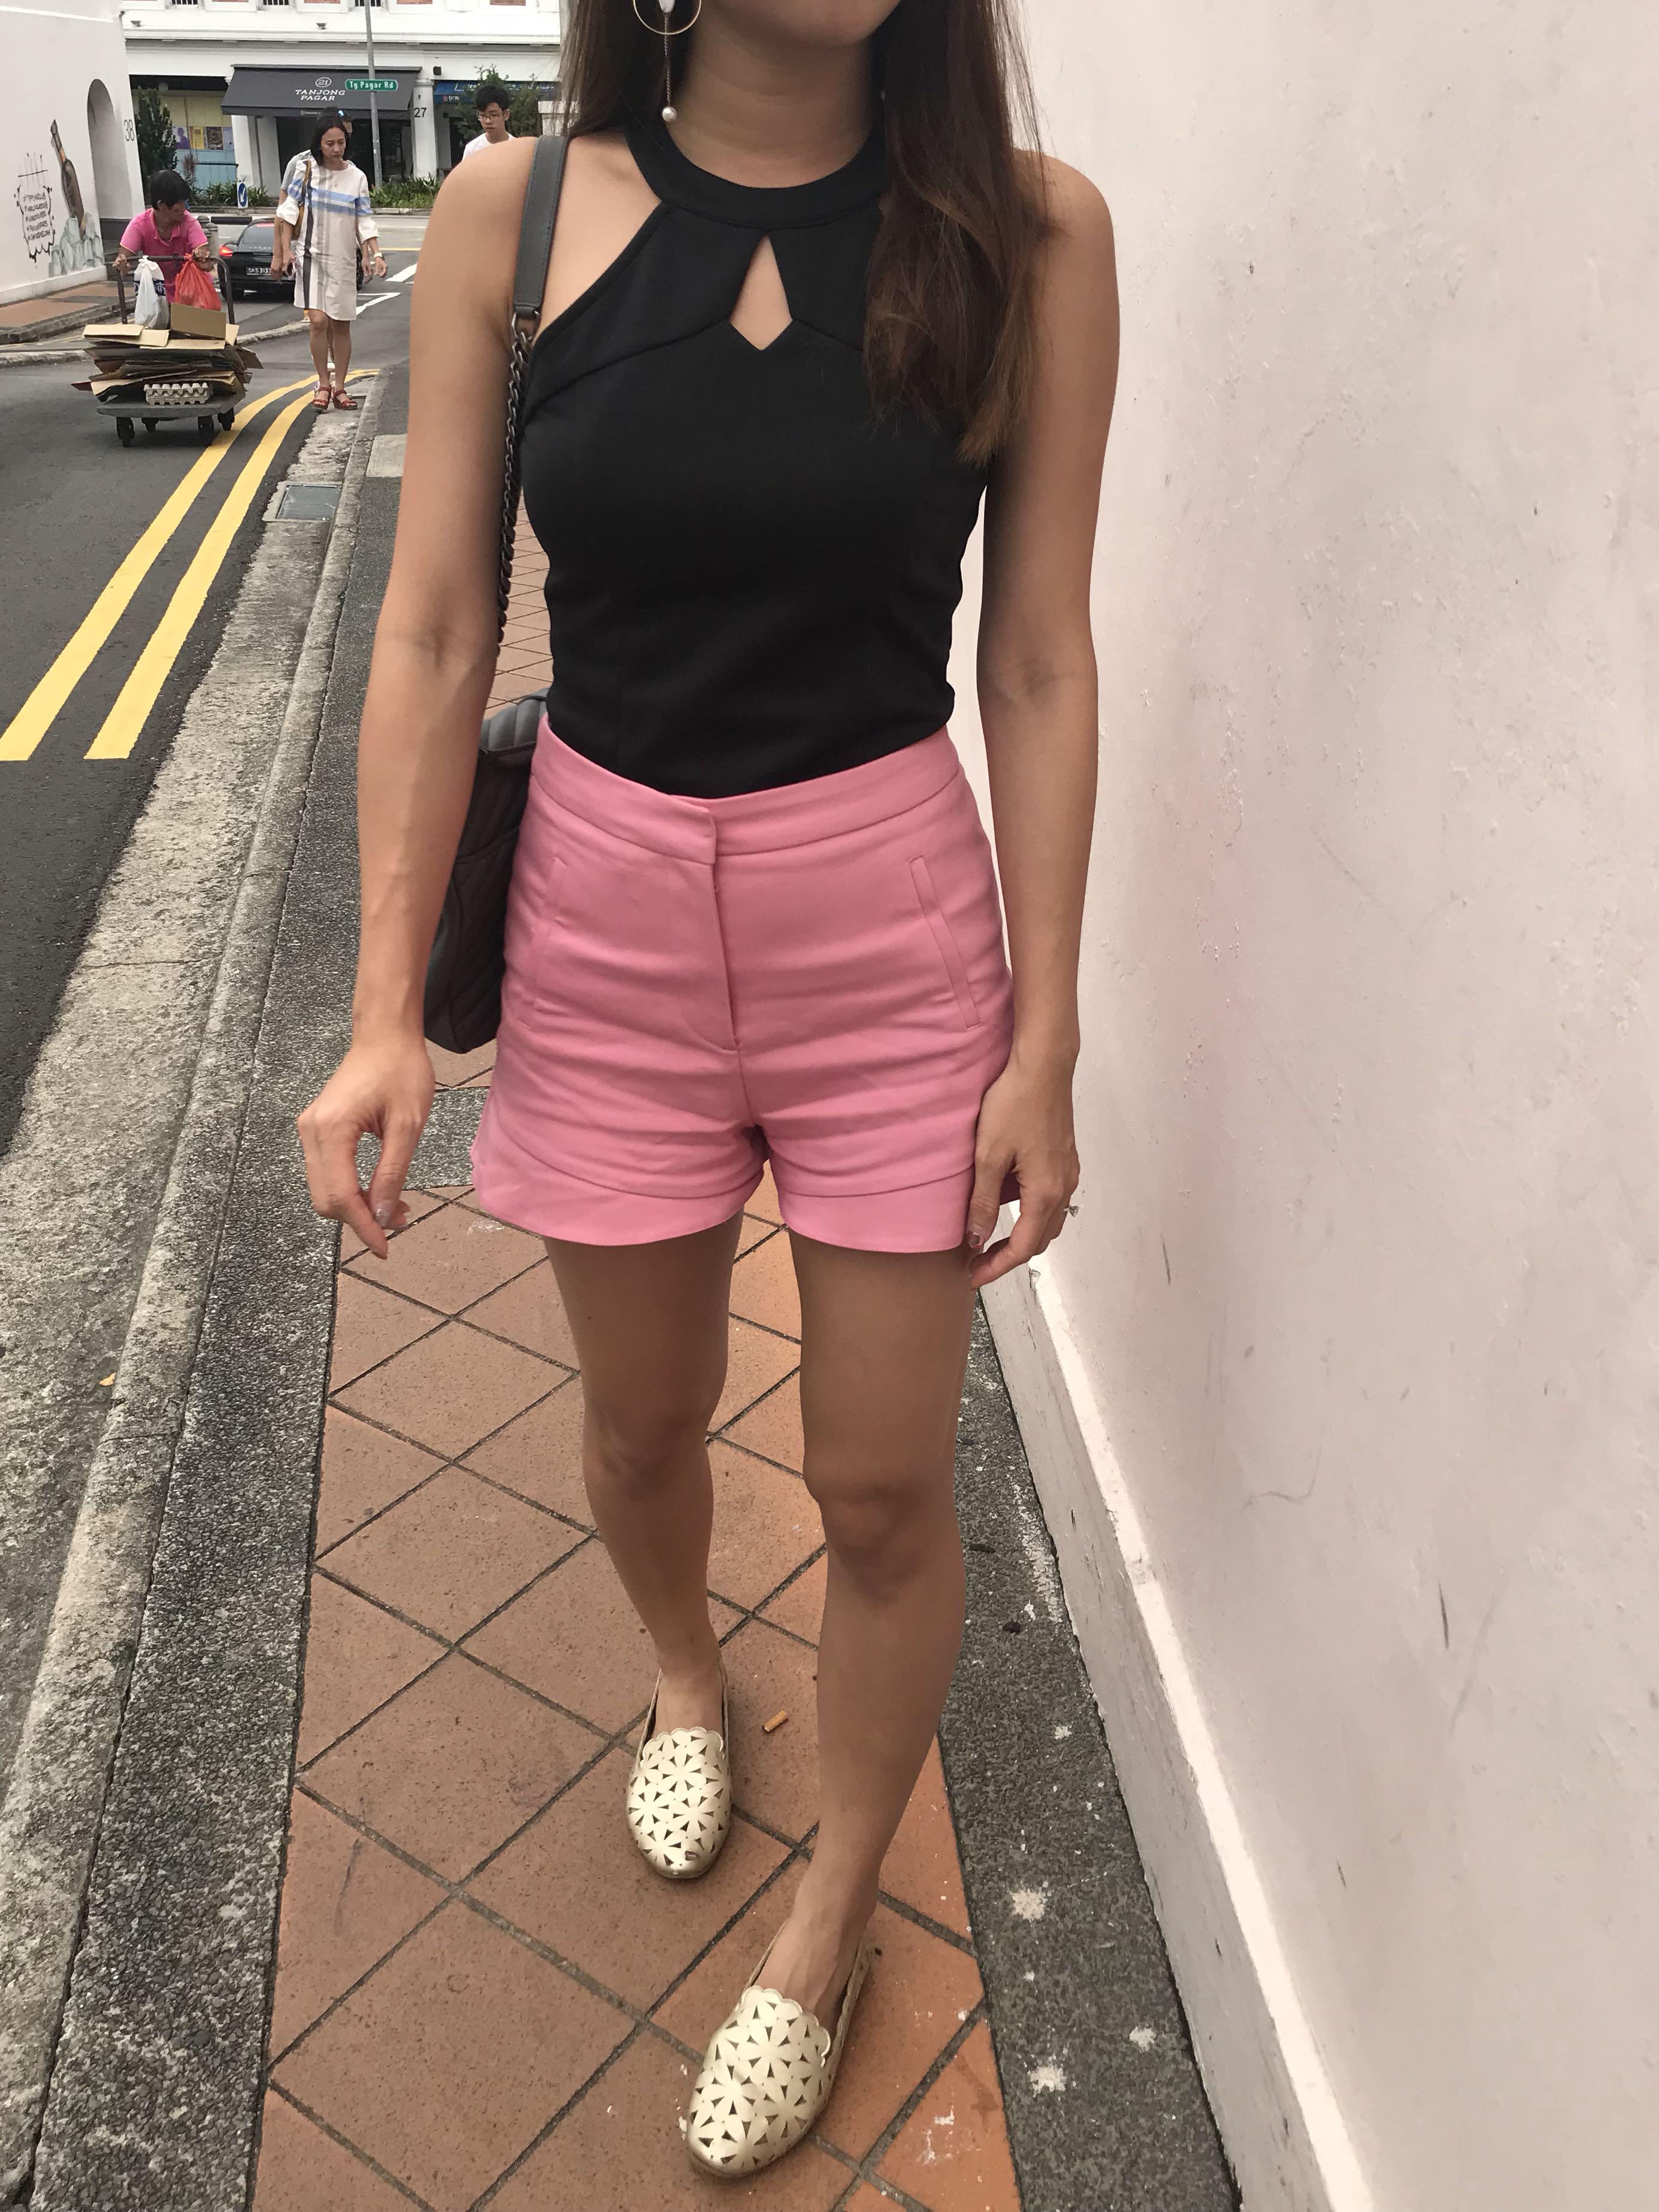 zara pink shorts